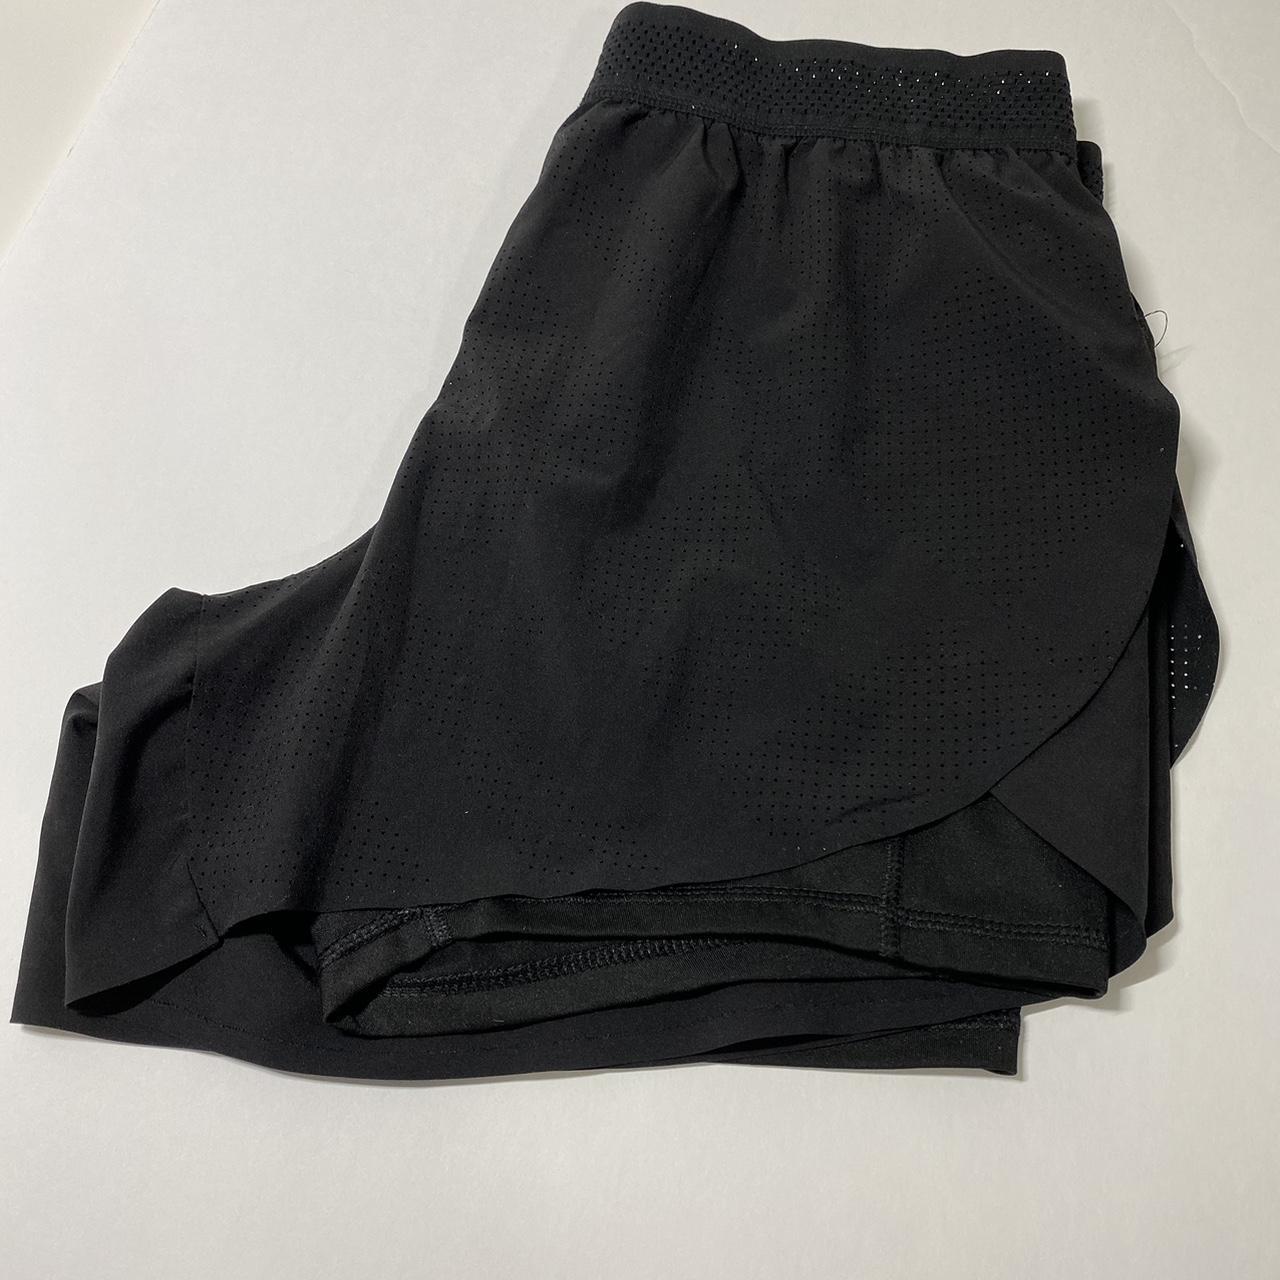 Avía Womens workout shorts, Bottom lining, Secret pocket